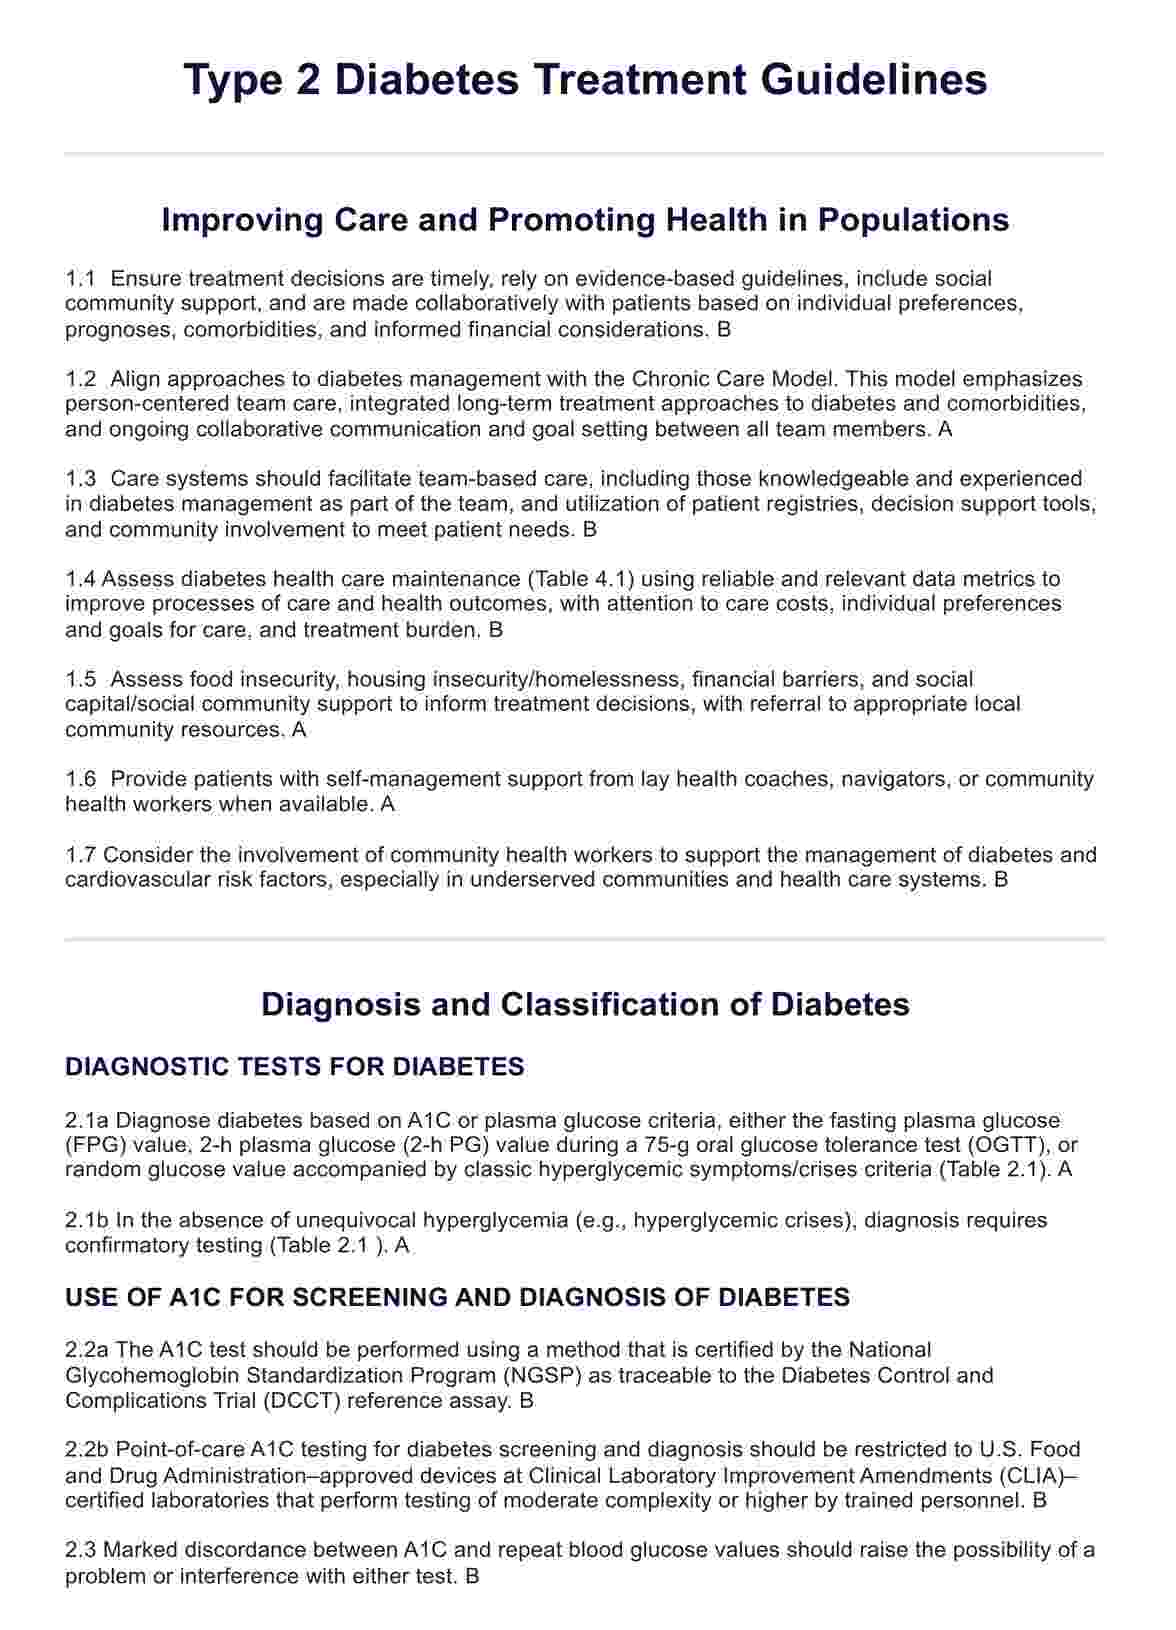 Type 2 Diabetes Treatment Guidelines PDF Example